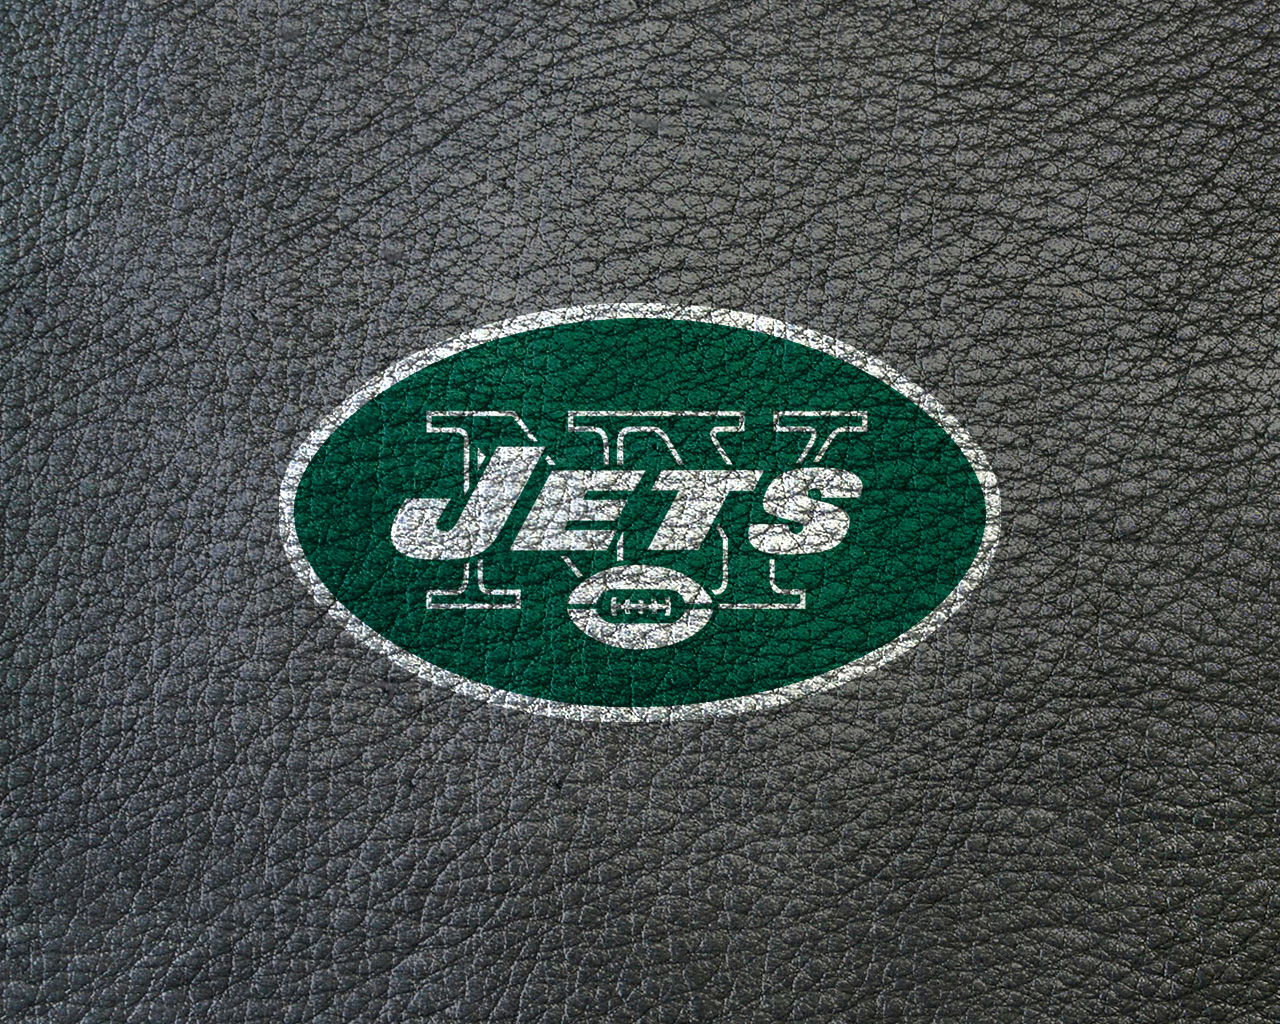 New York Jets 3d Logo Wallpaper 1280×960. Share this wallpaper